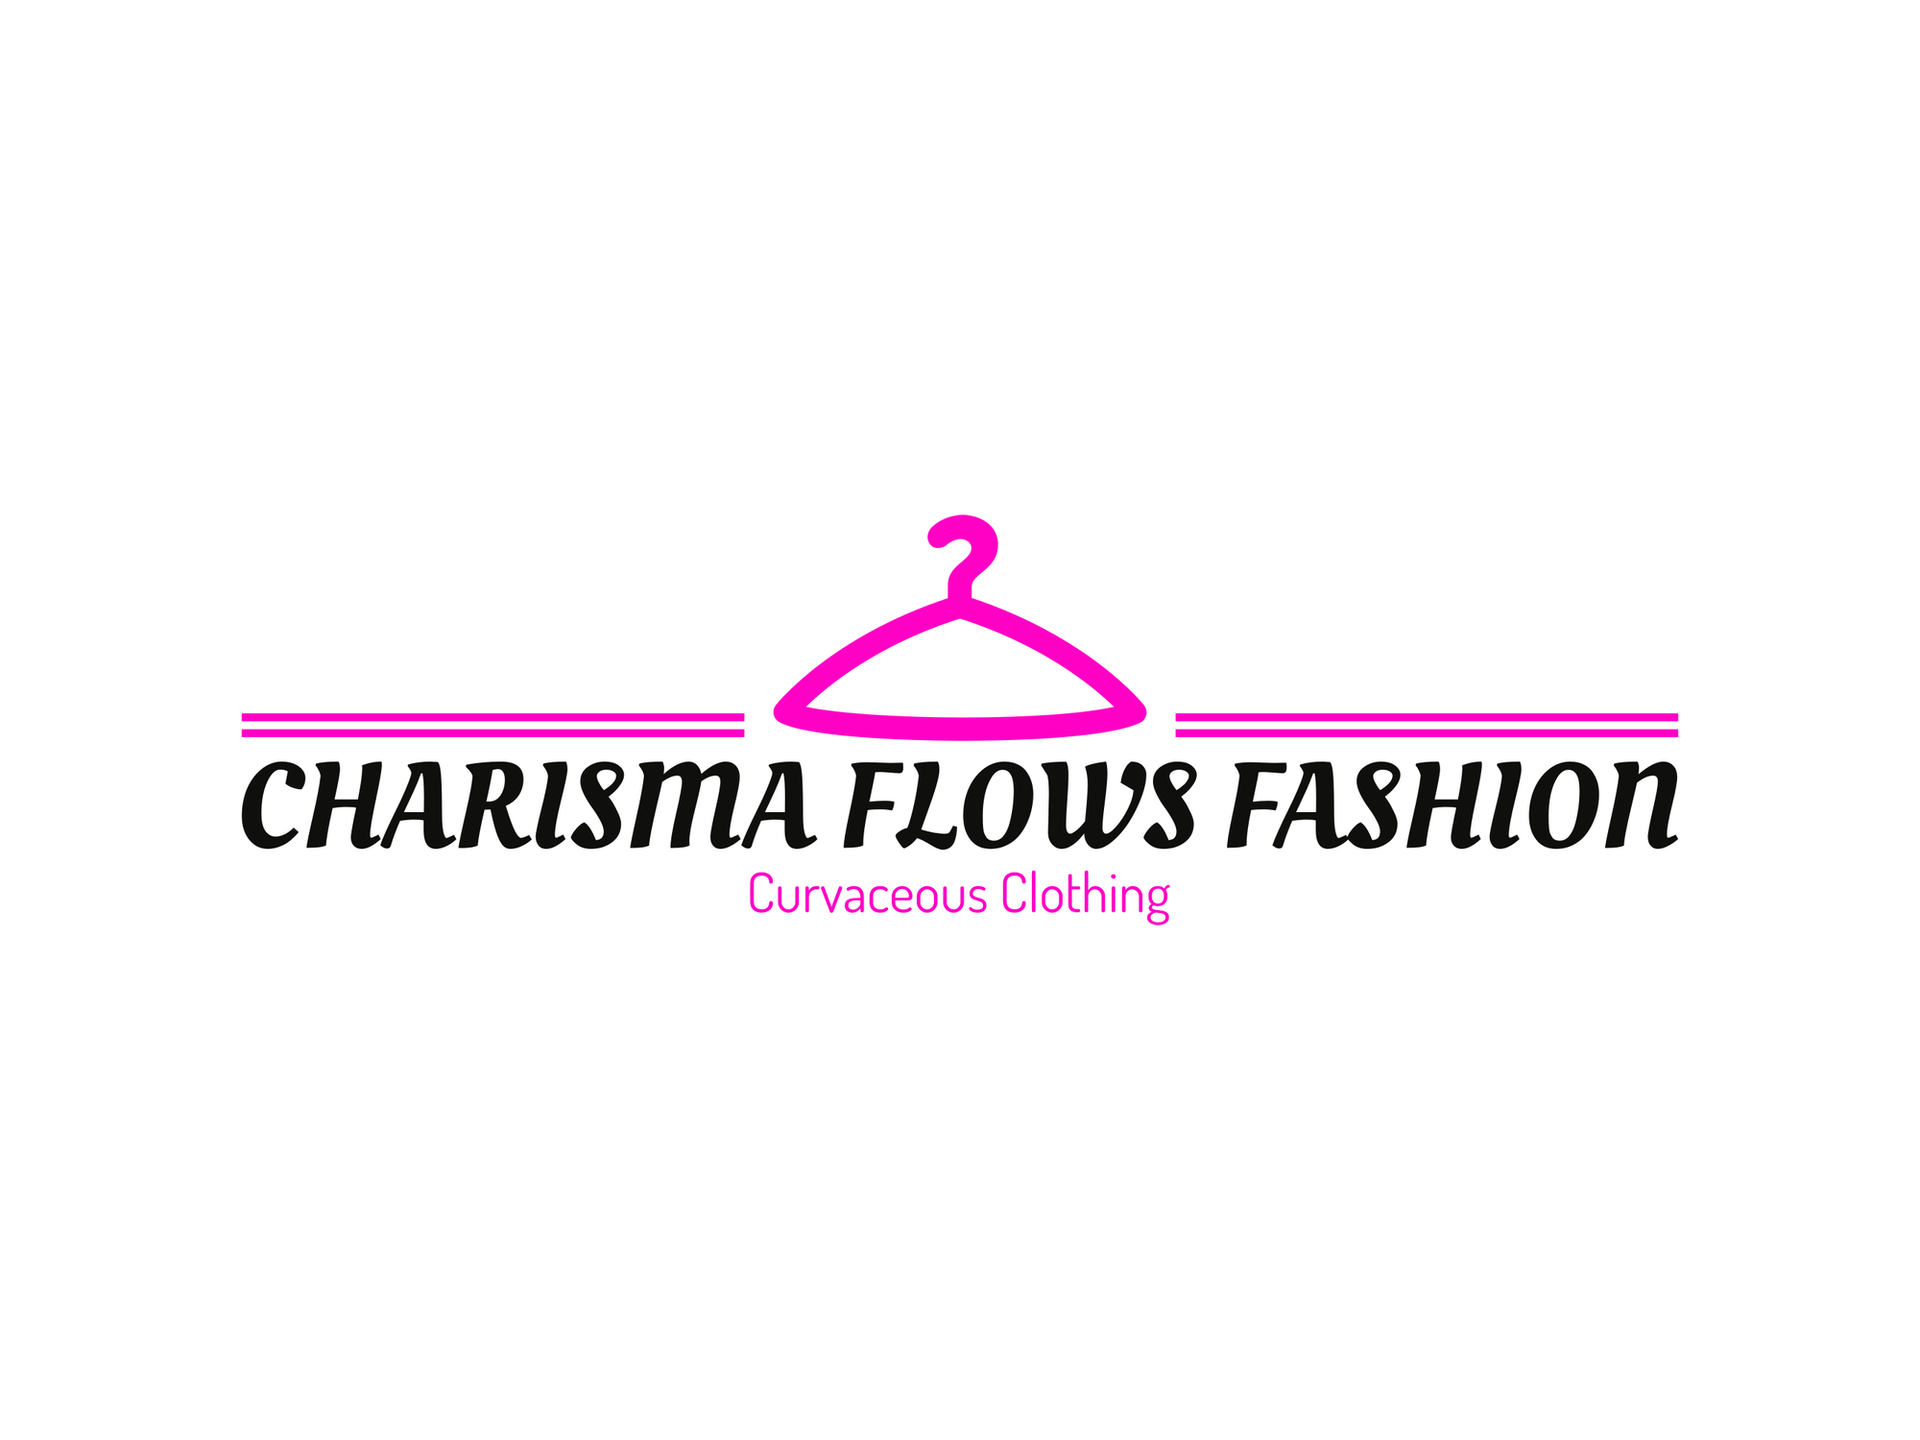 Load video: Charisma Flows Fashion